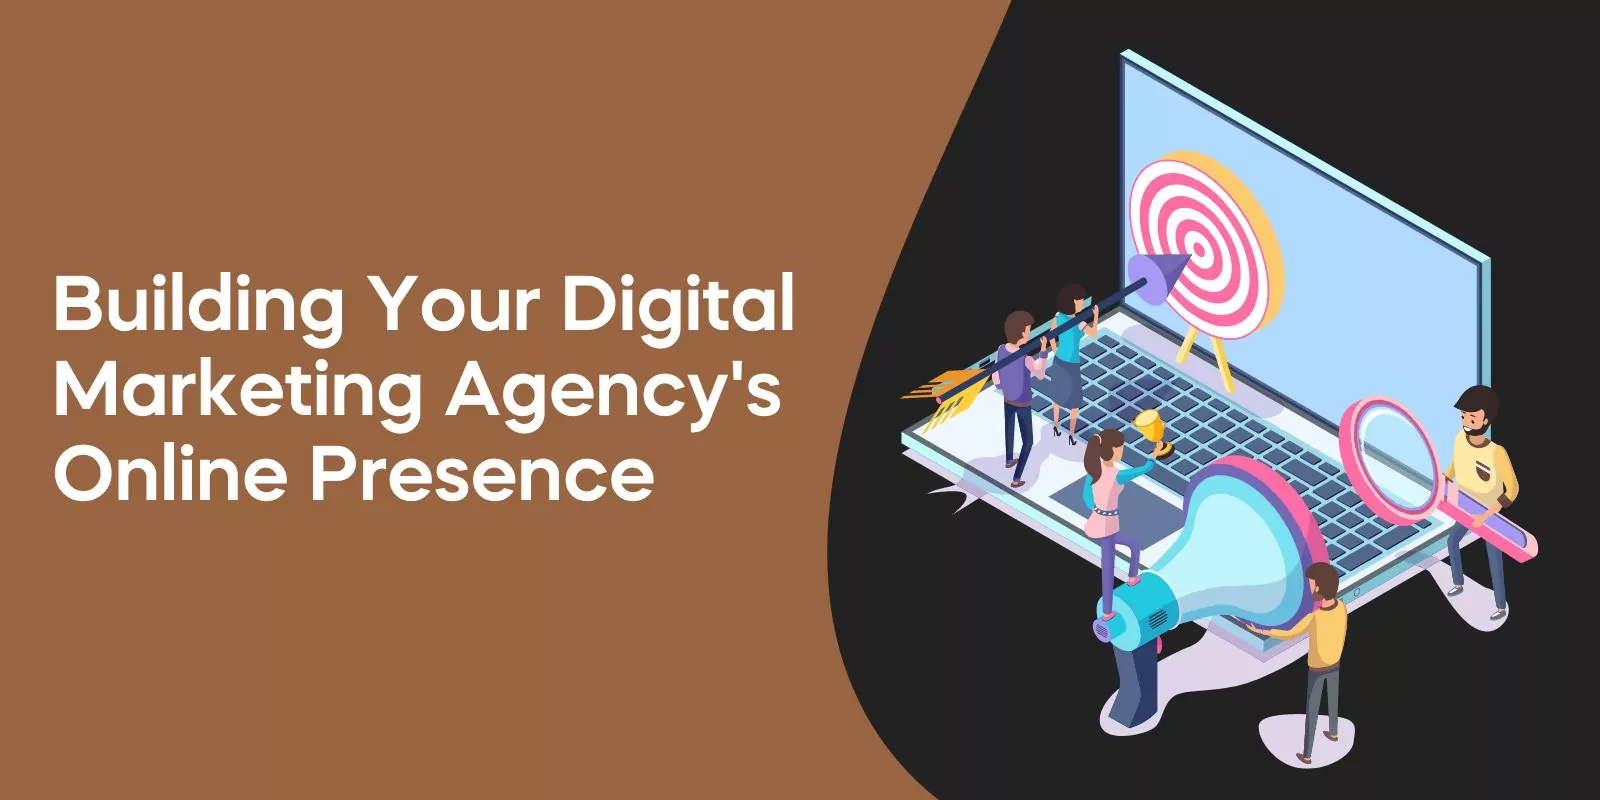 Building Your Digital Marketing Agency's Online Presence